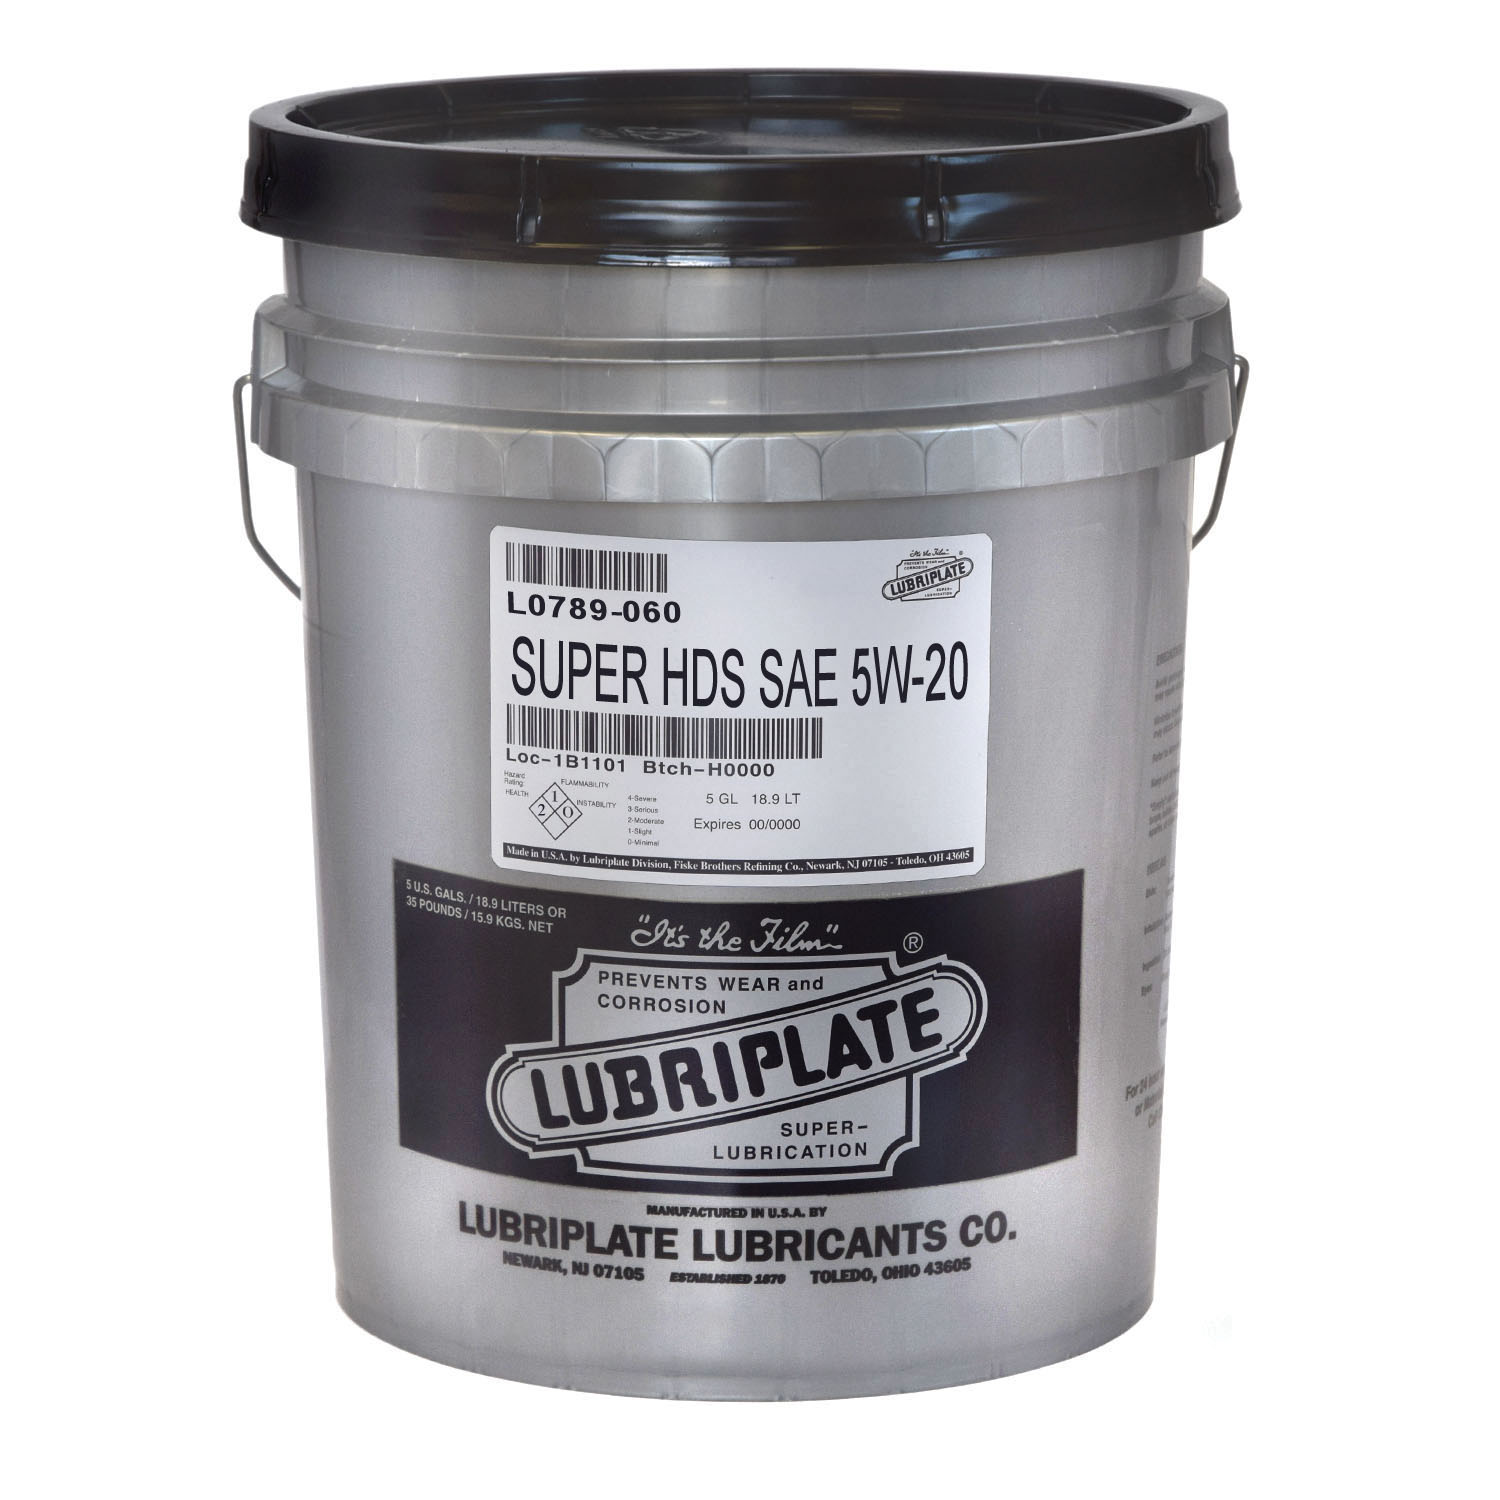 Lubriplate® L0789-060 Super HDS Heavy Duty Motor Oil, 5 gal Pail, Mineral Oil Odor/Scent, Liquid Form, Amber